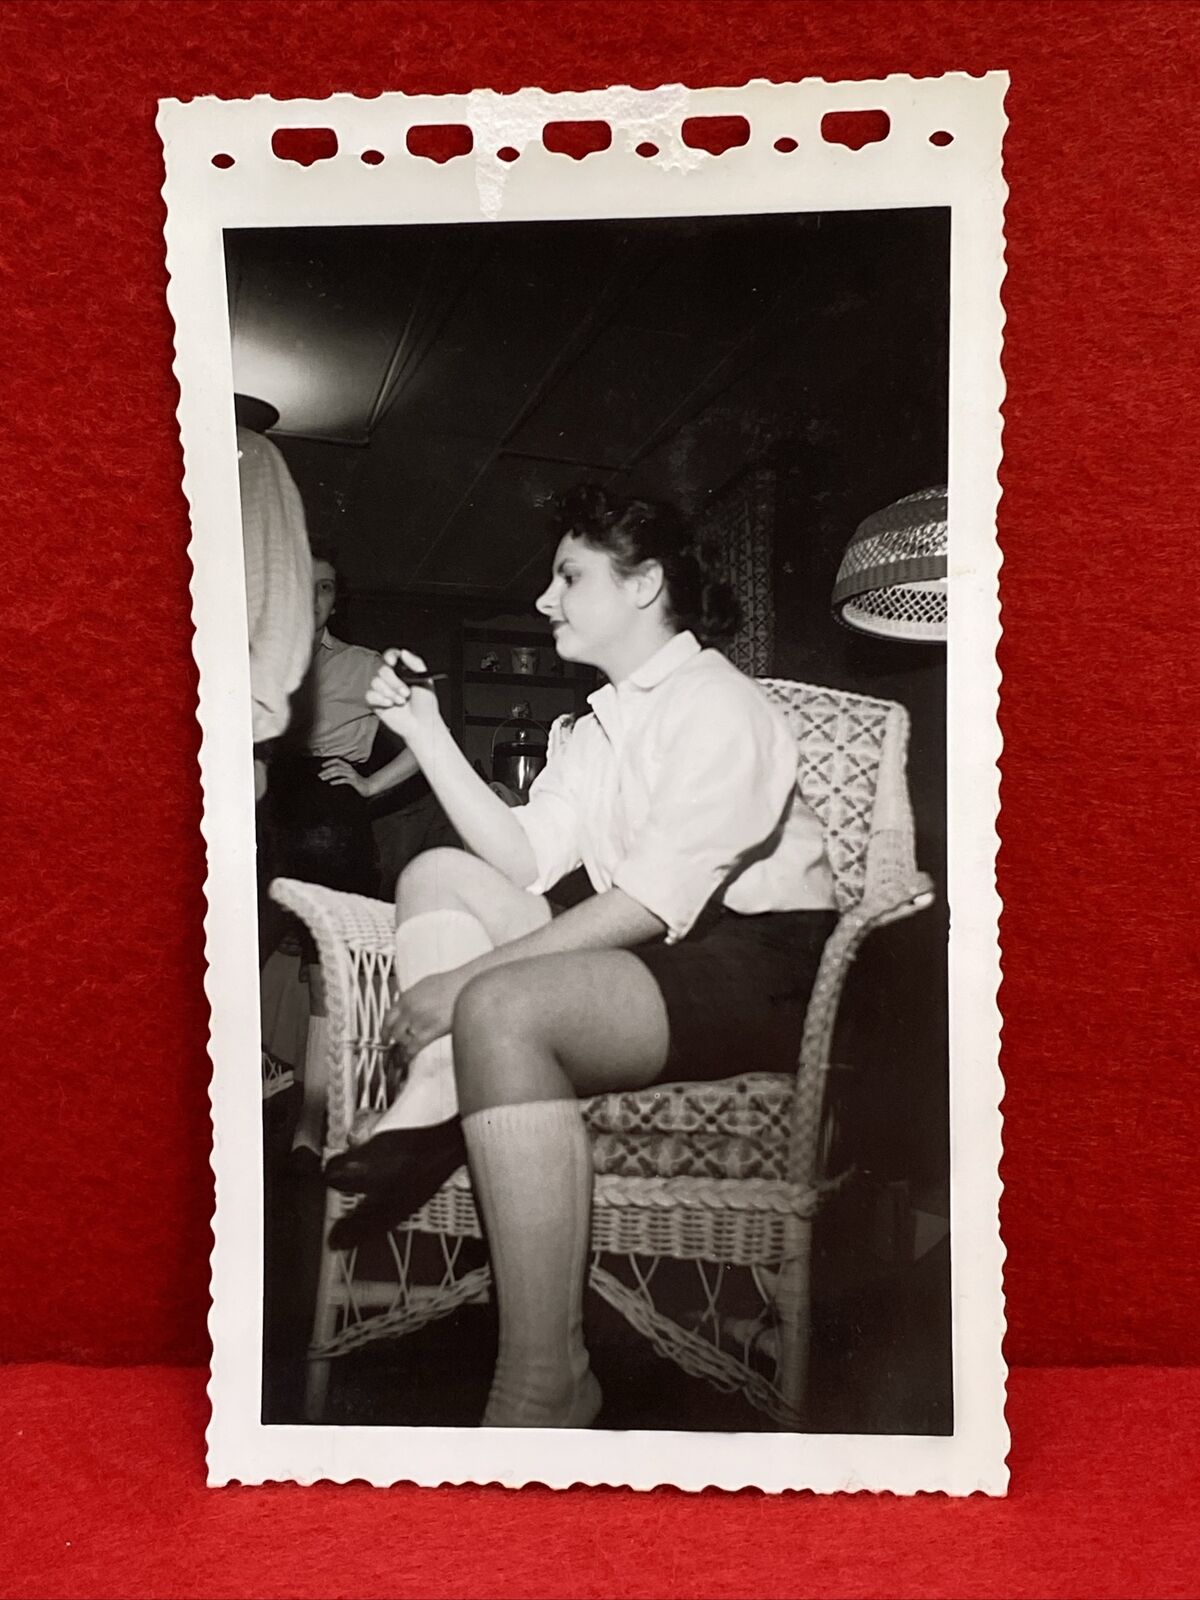 1900s 1950s Girl Smoking Pipe @ Basement Party Original Vintage Rare OOAK Photo